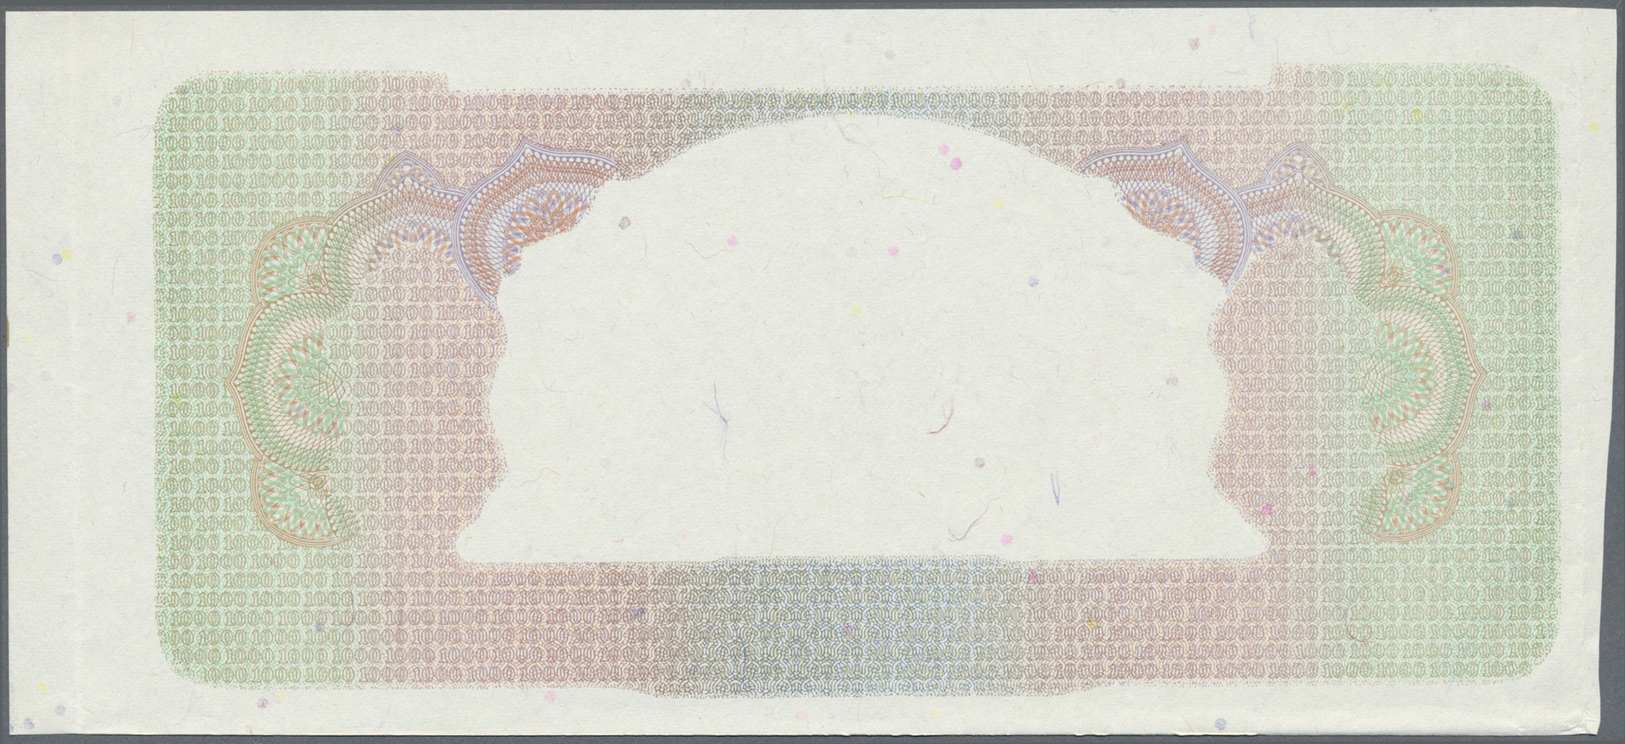 00675 Ecuador:  Banco Central Del Ecuador 1000 Sucres 1969-73 Proof, Without Signatures, Serial Number And Date, P.107p - Ecuador